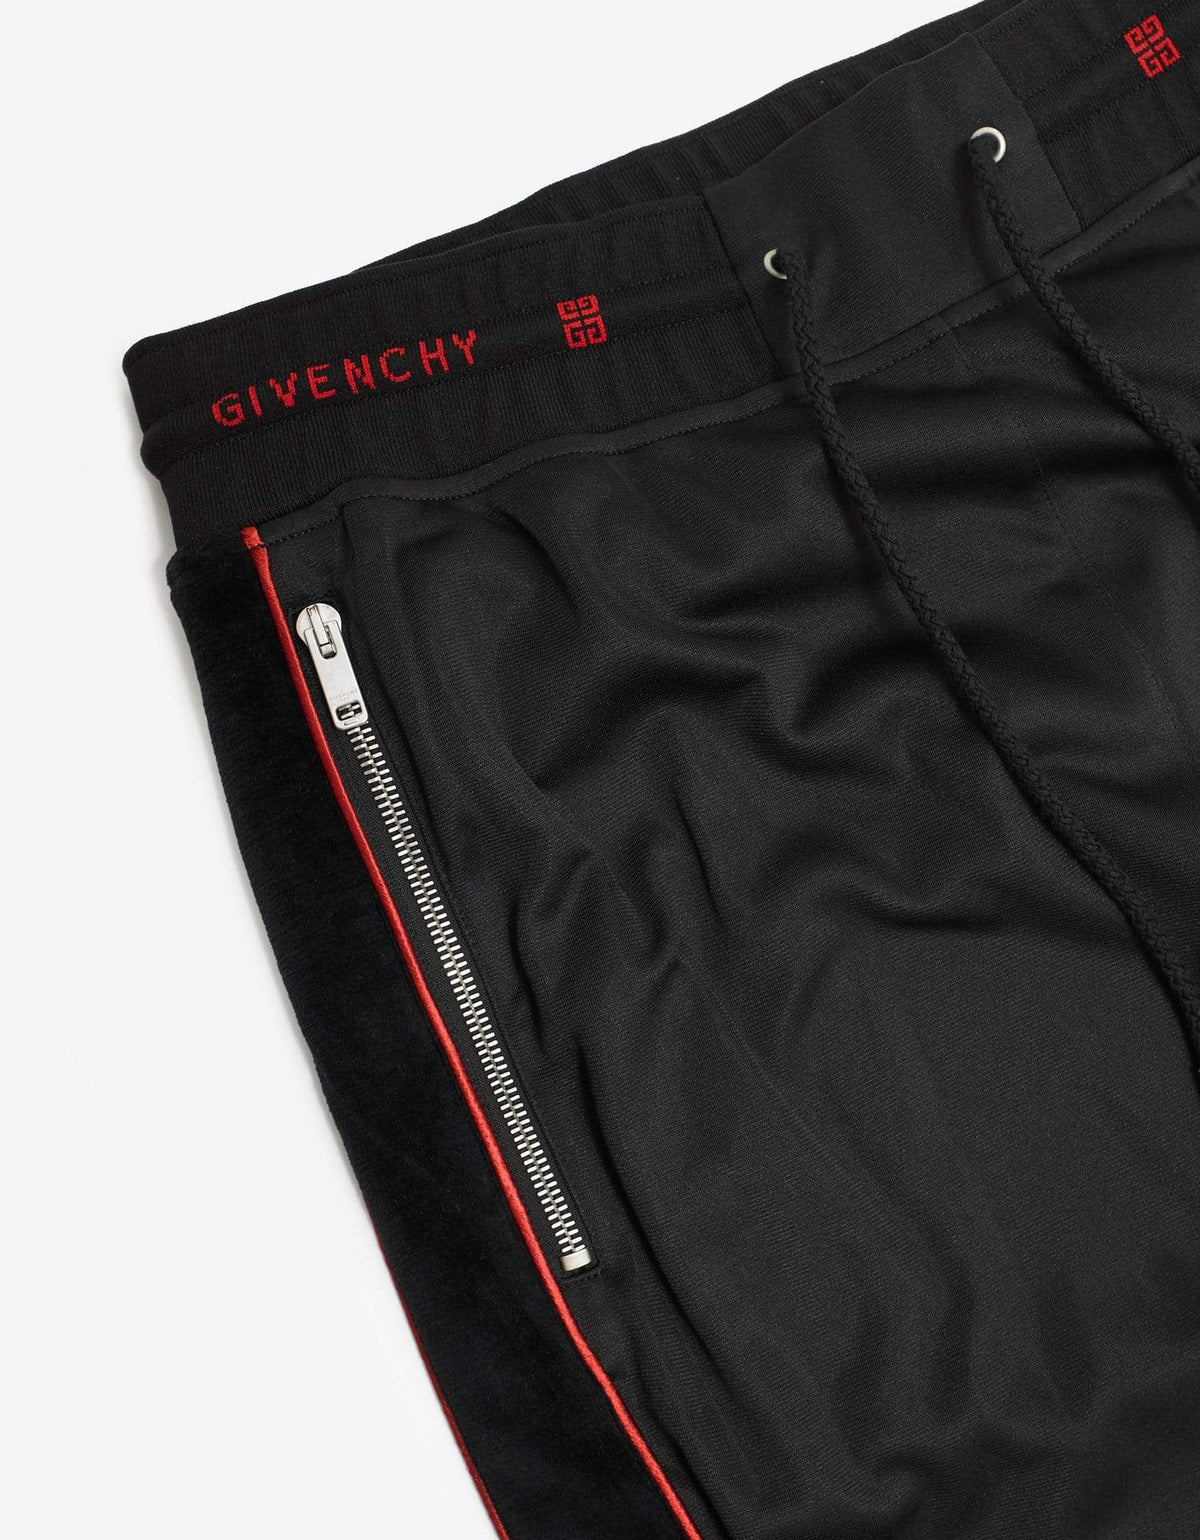 Givenchy Black Velvet Band Sweat Pants